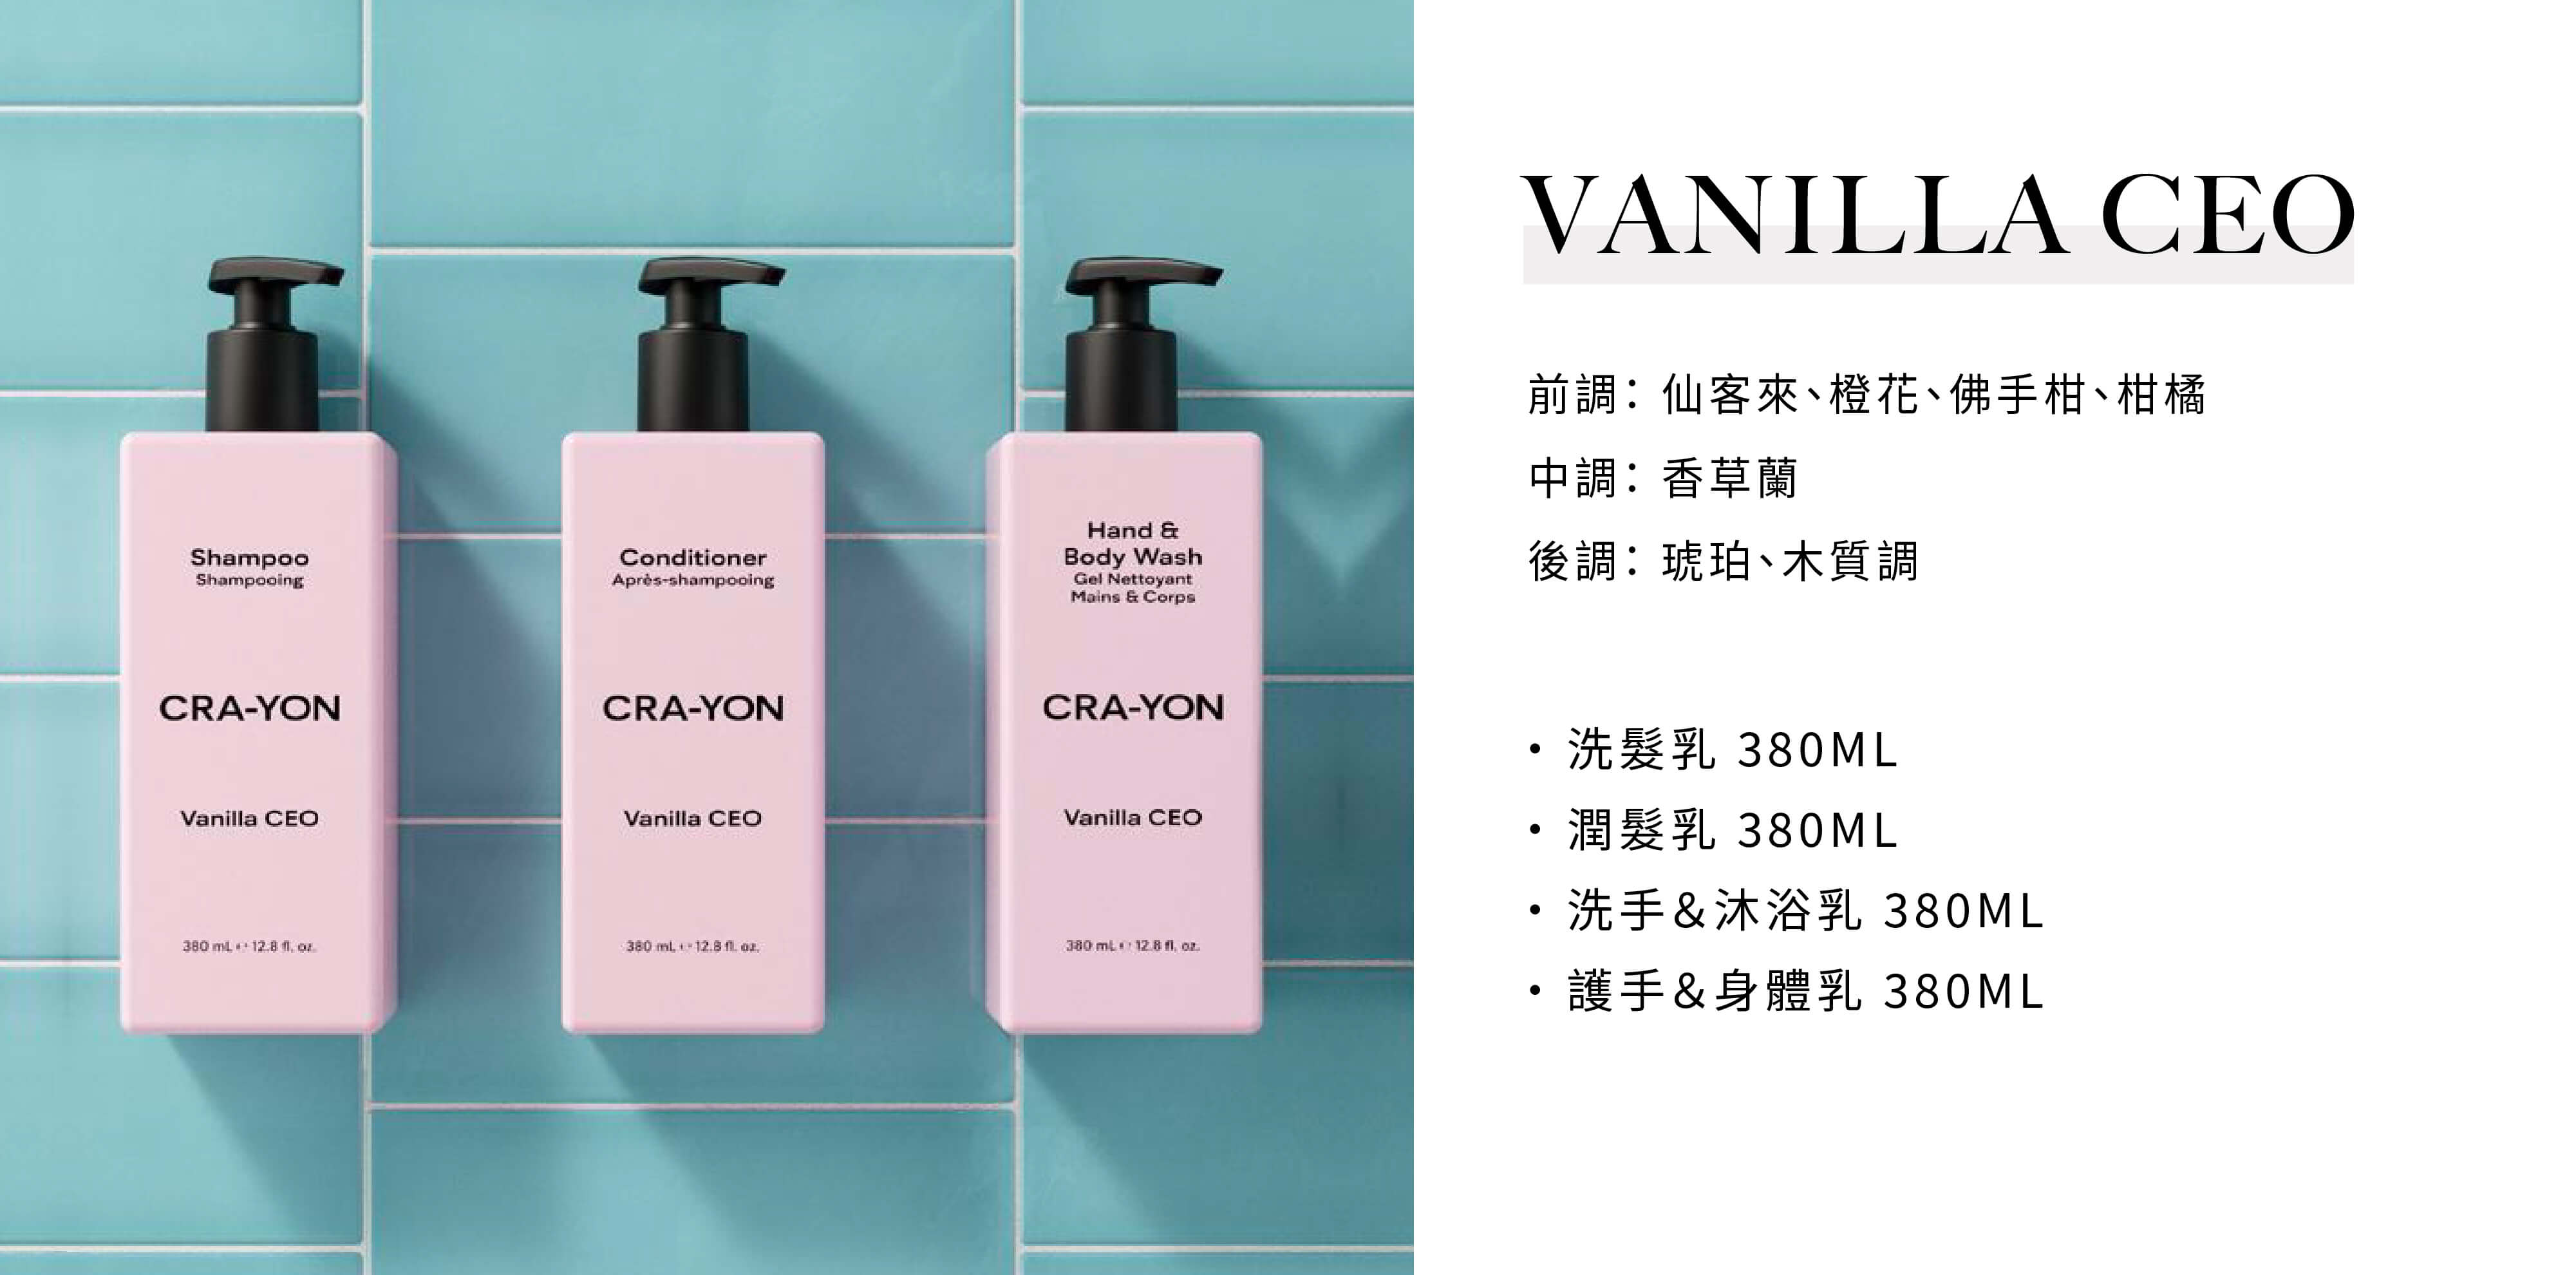 CRA-YON 飯店民宿沐浴用品Vanilla CEO系列，由Sunlife飯店沐浴配品供應商提供